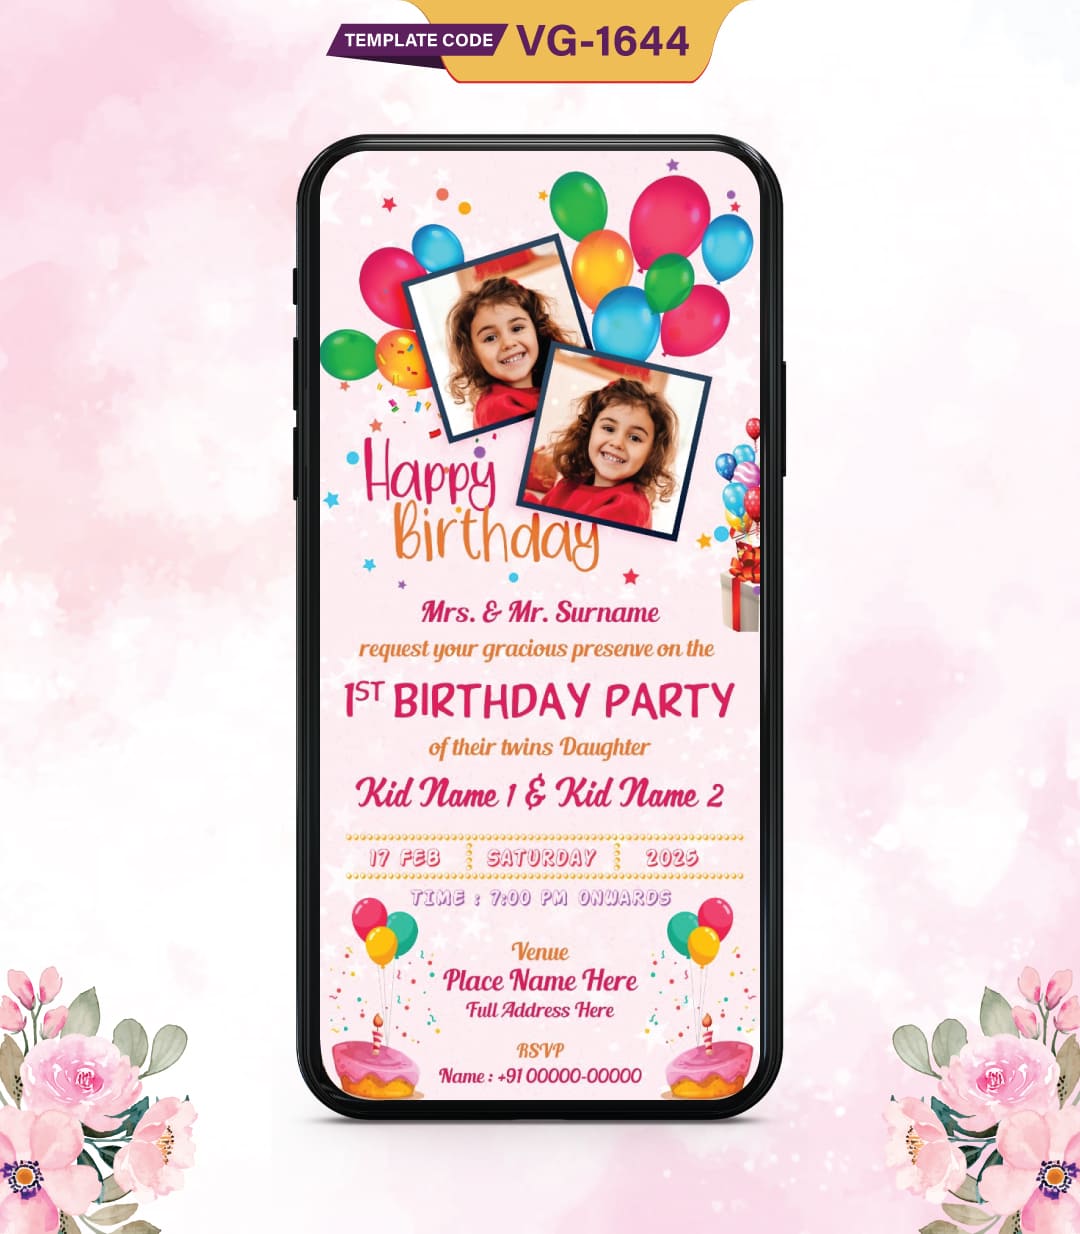 Twins Daughter Birthday Invitation Card